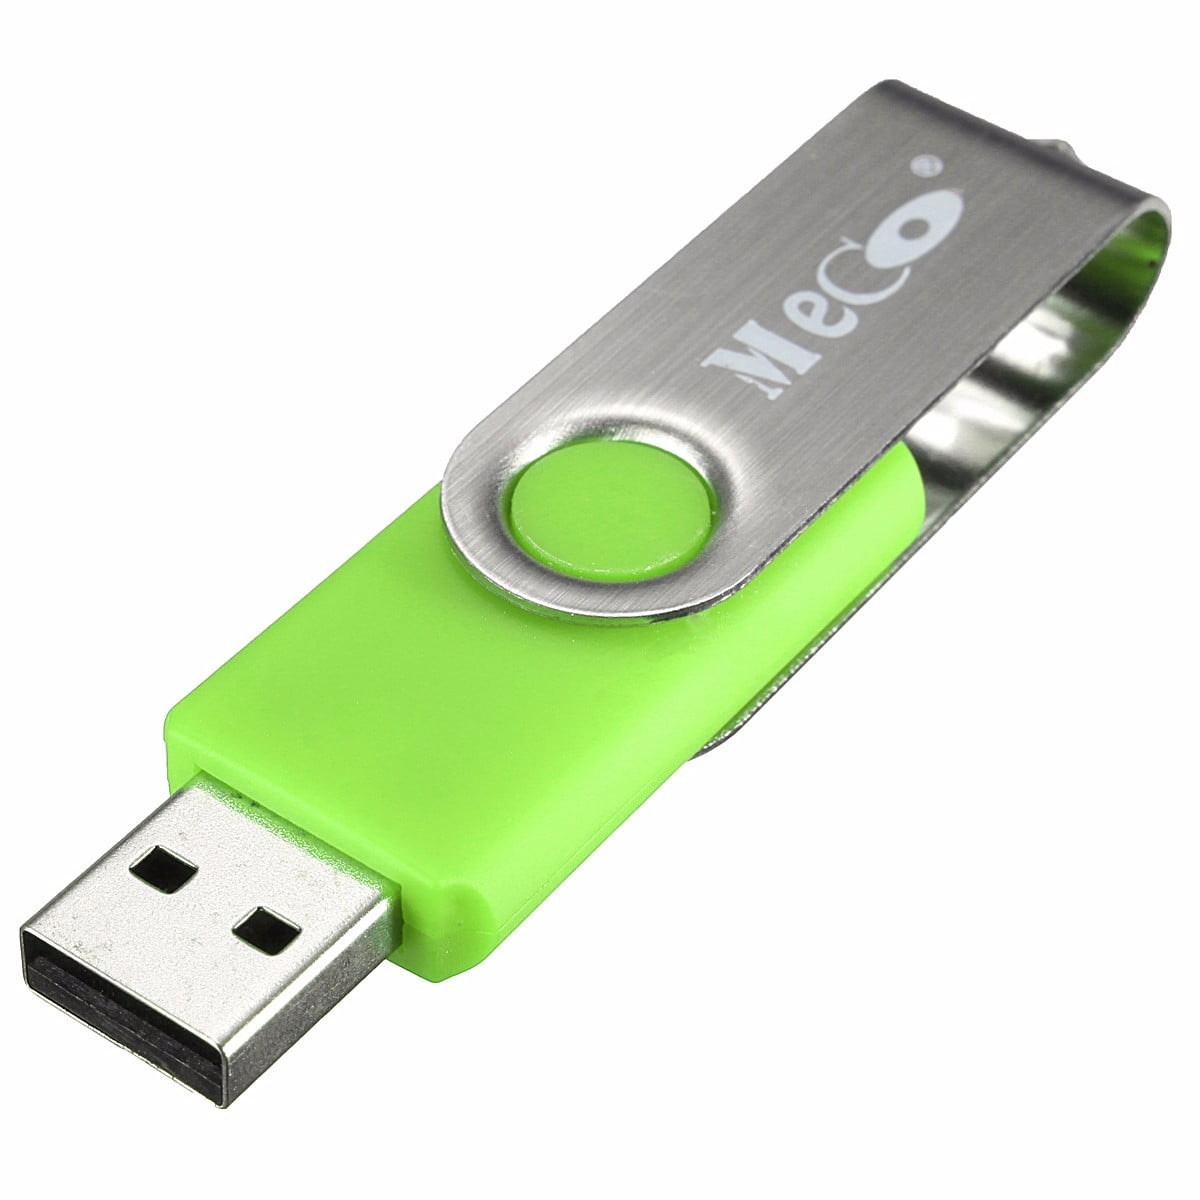 Usb 8gb. Юсб 20. USB 8. USB Flash Drive. Флешка 20 лет.